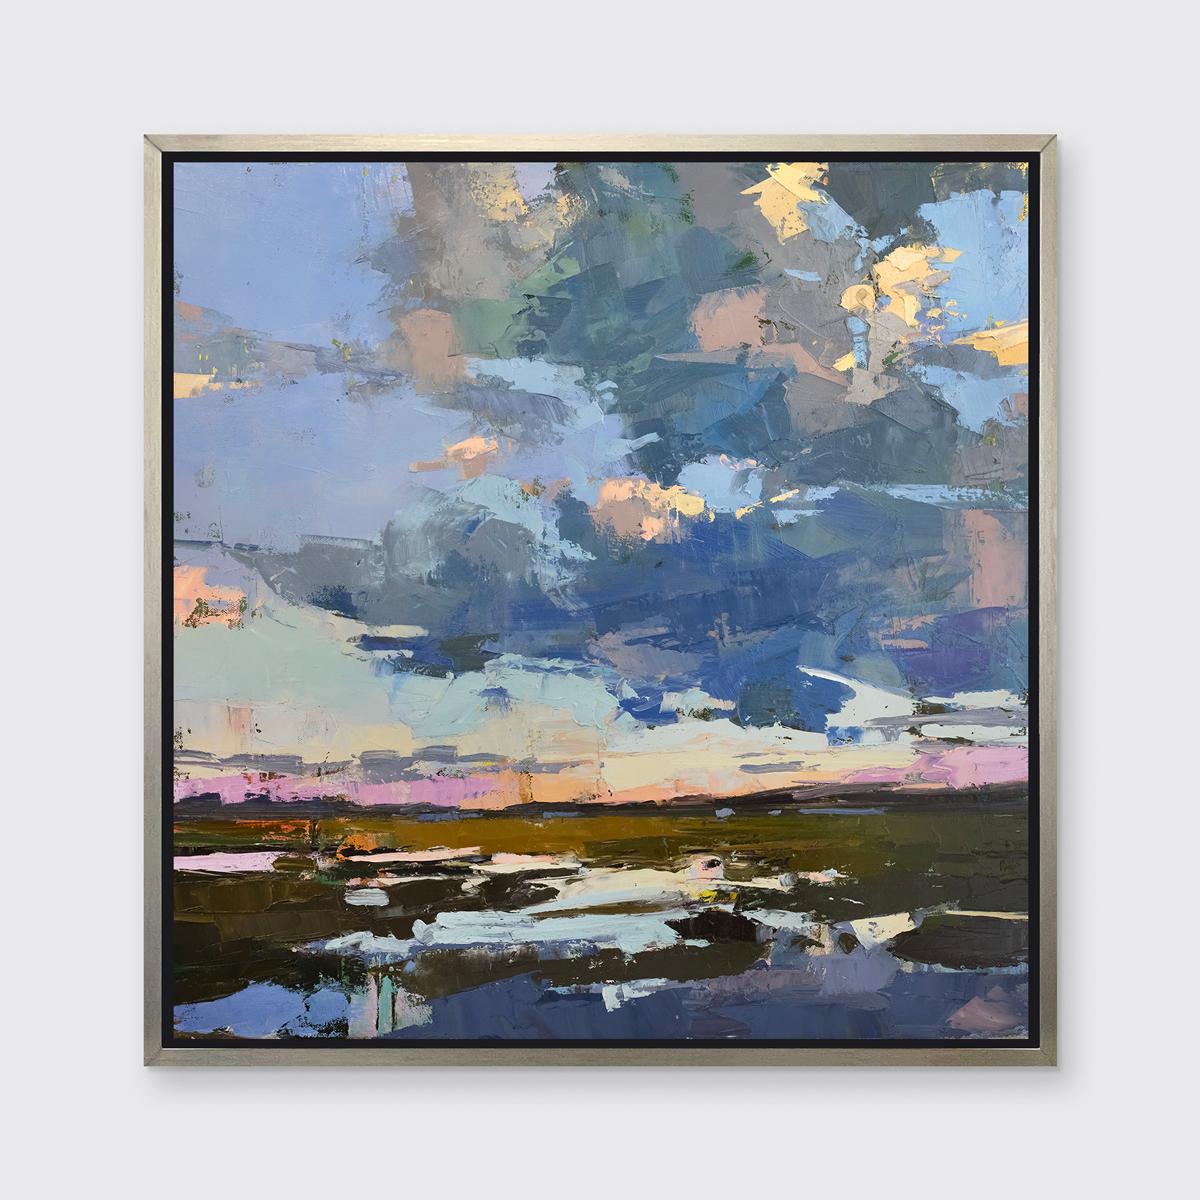 Bri Custer Landscape Print - "Missed" Framed Limited Edition Print, 48" x 48"